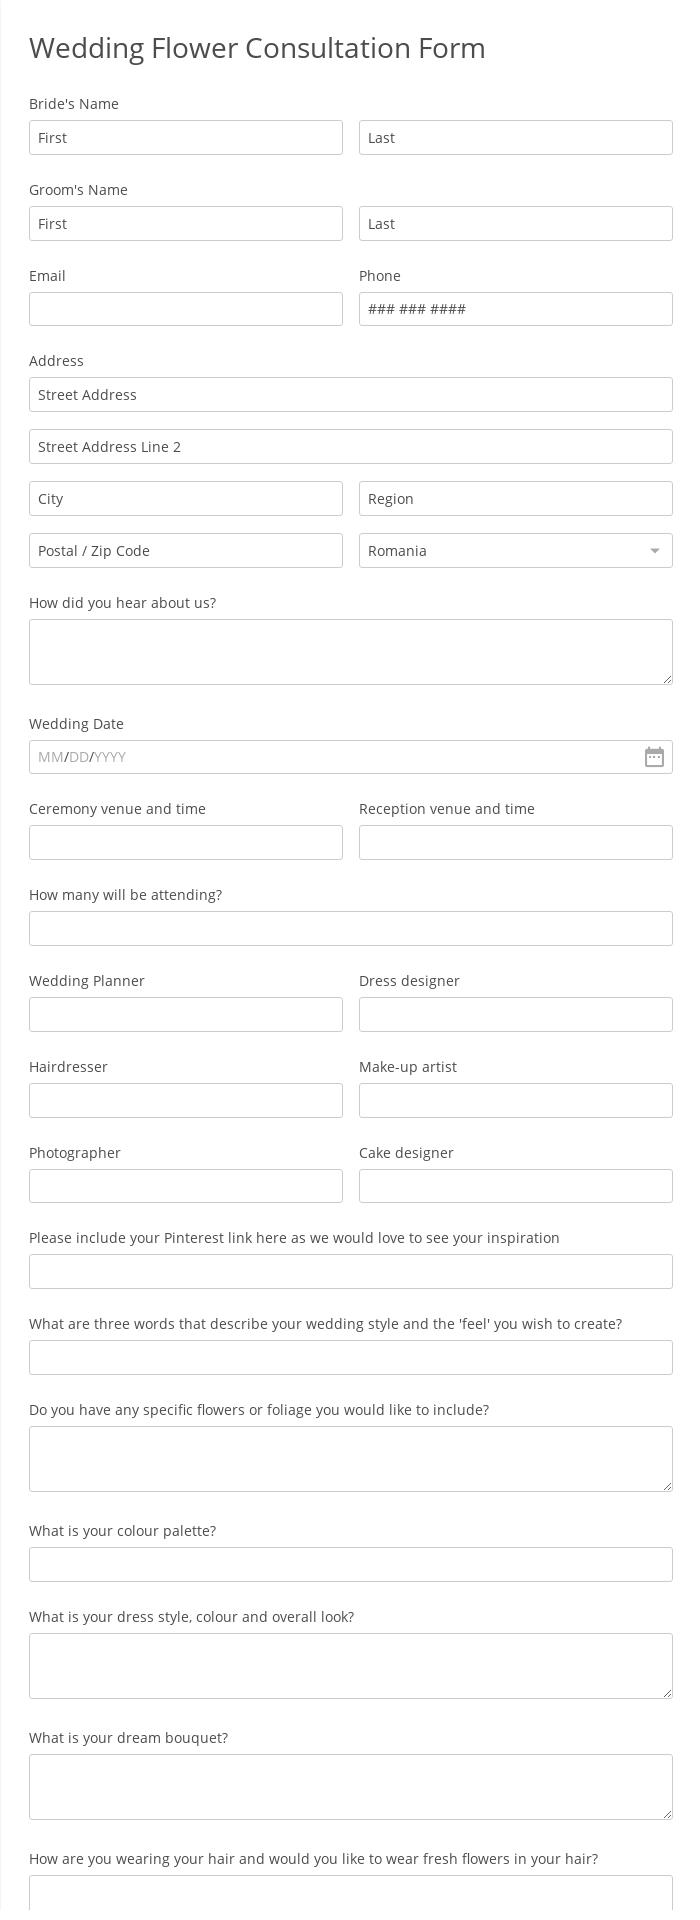 Wedding Flower Consultation Form